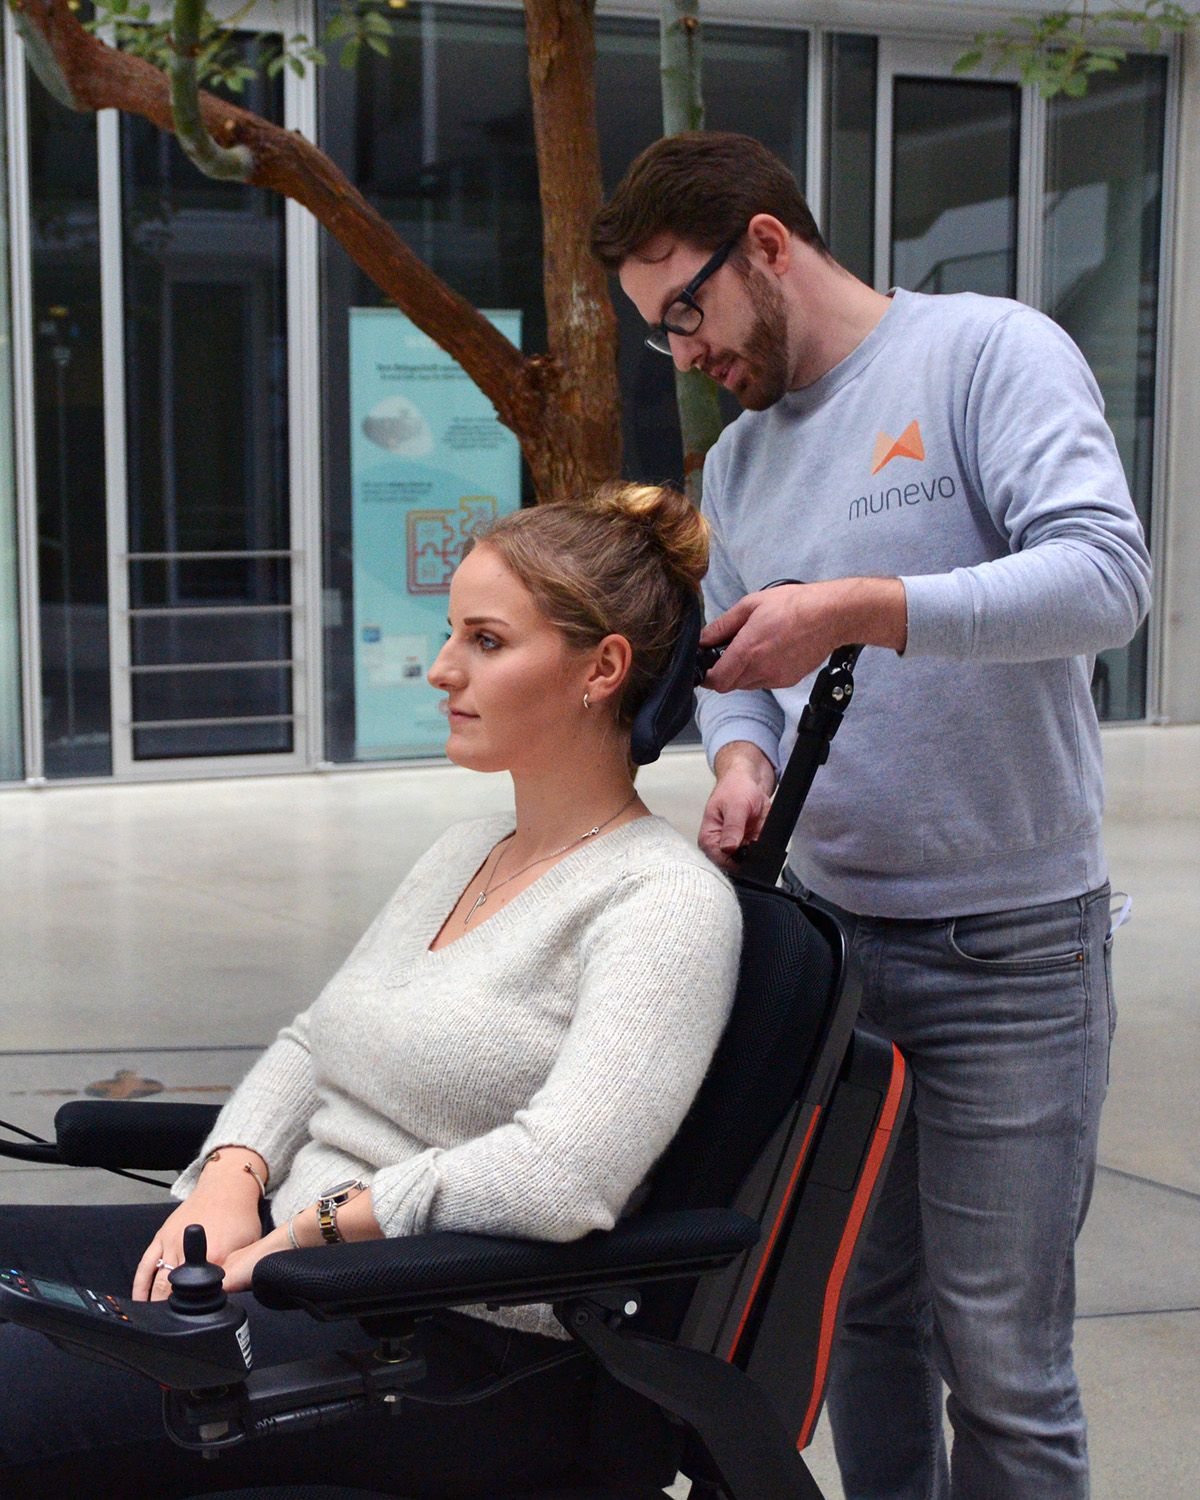 munevo employee adjusting munevo user's wheelchair headrest